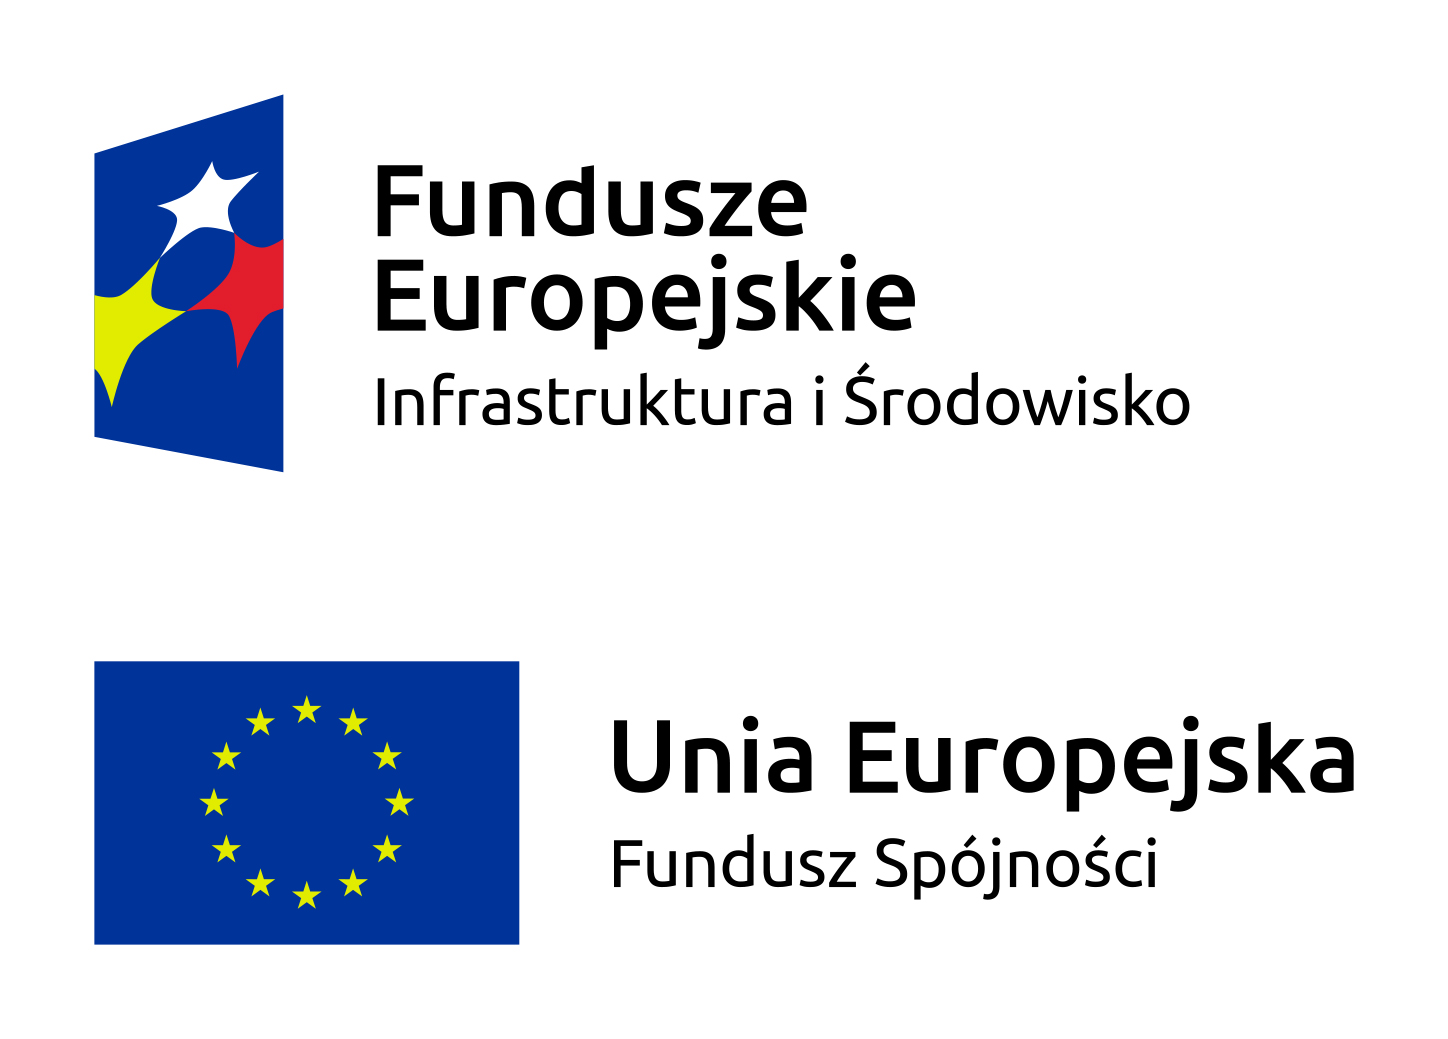   Projekty dofinansowane z Funduszy Europejskich 